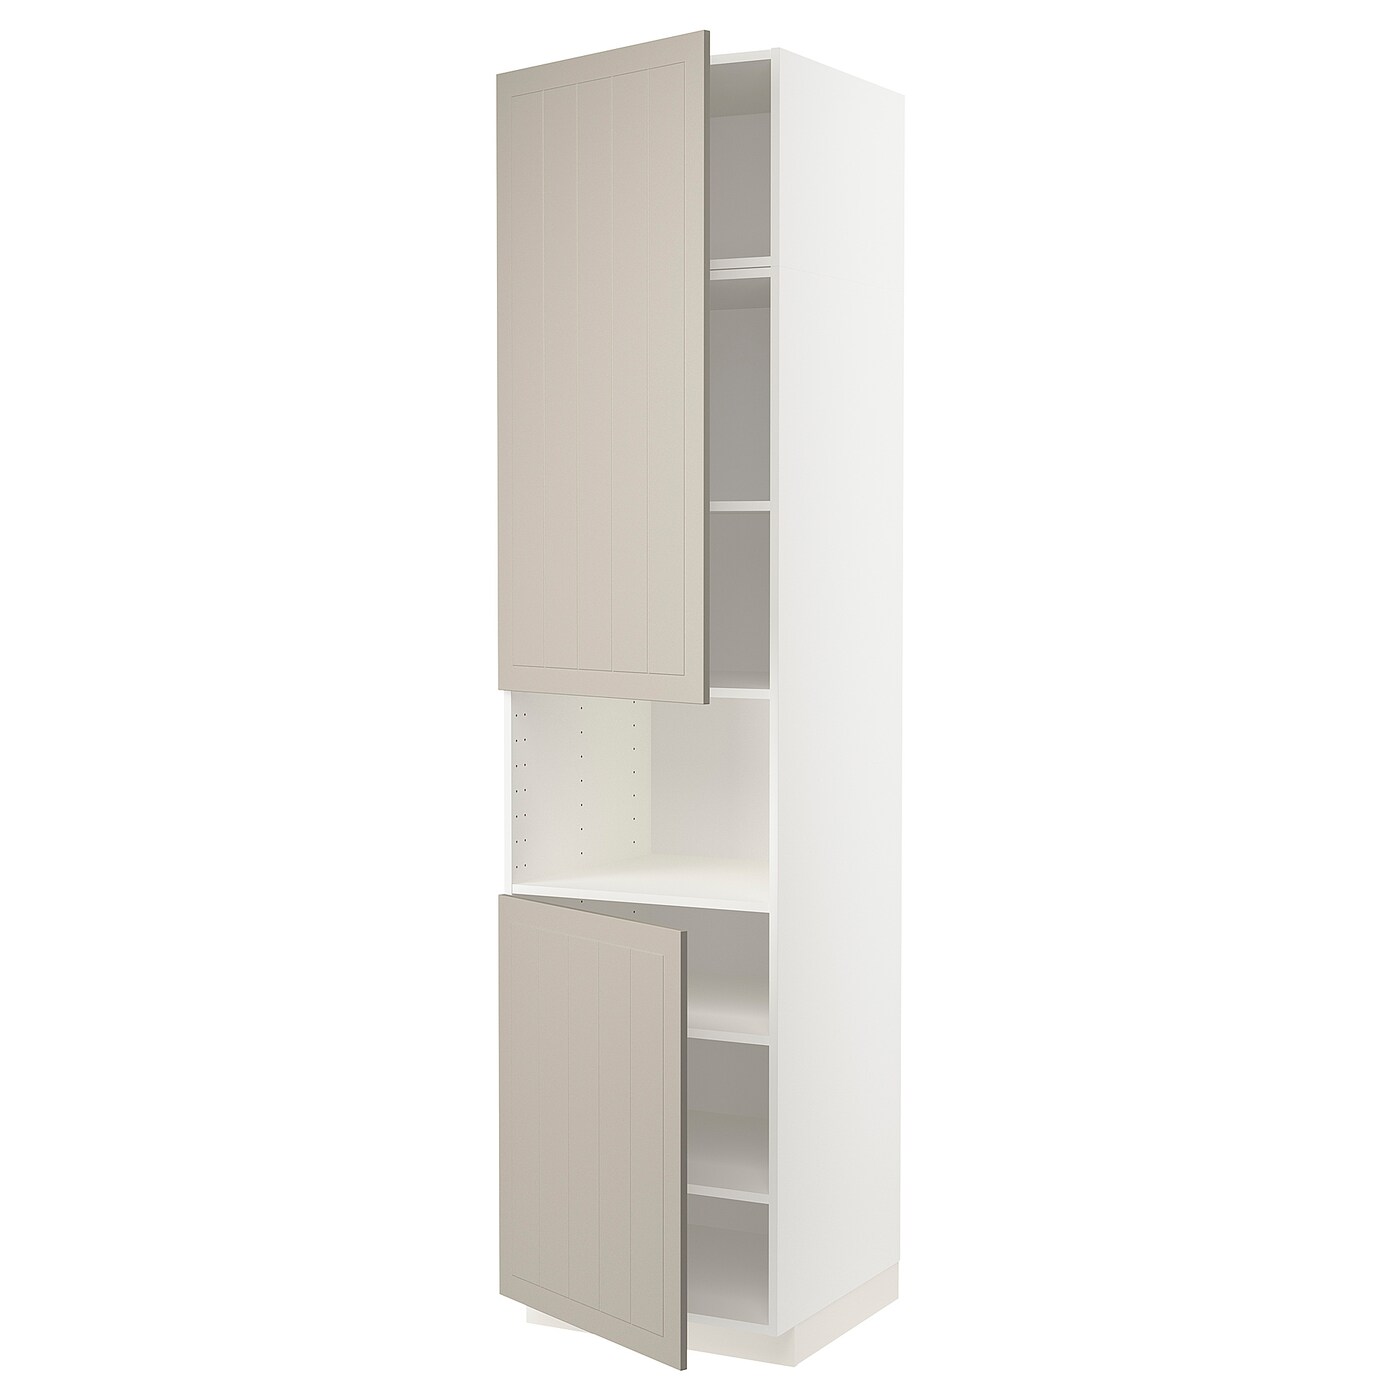 Высокий кухонный шкаф с полками - IKEA METOD/МЕТОД ИКЕА, 240х60х60 см, белый/бежевый